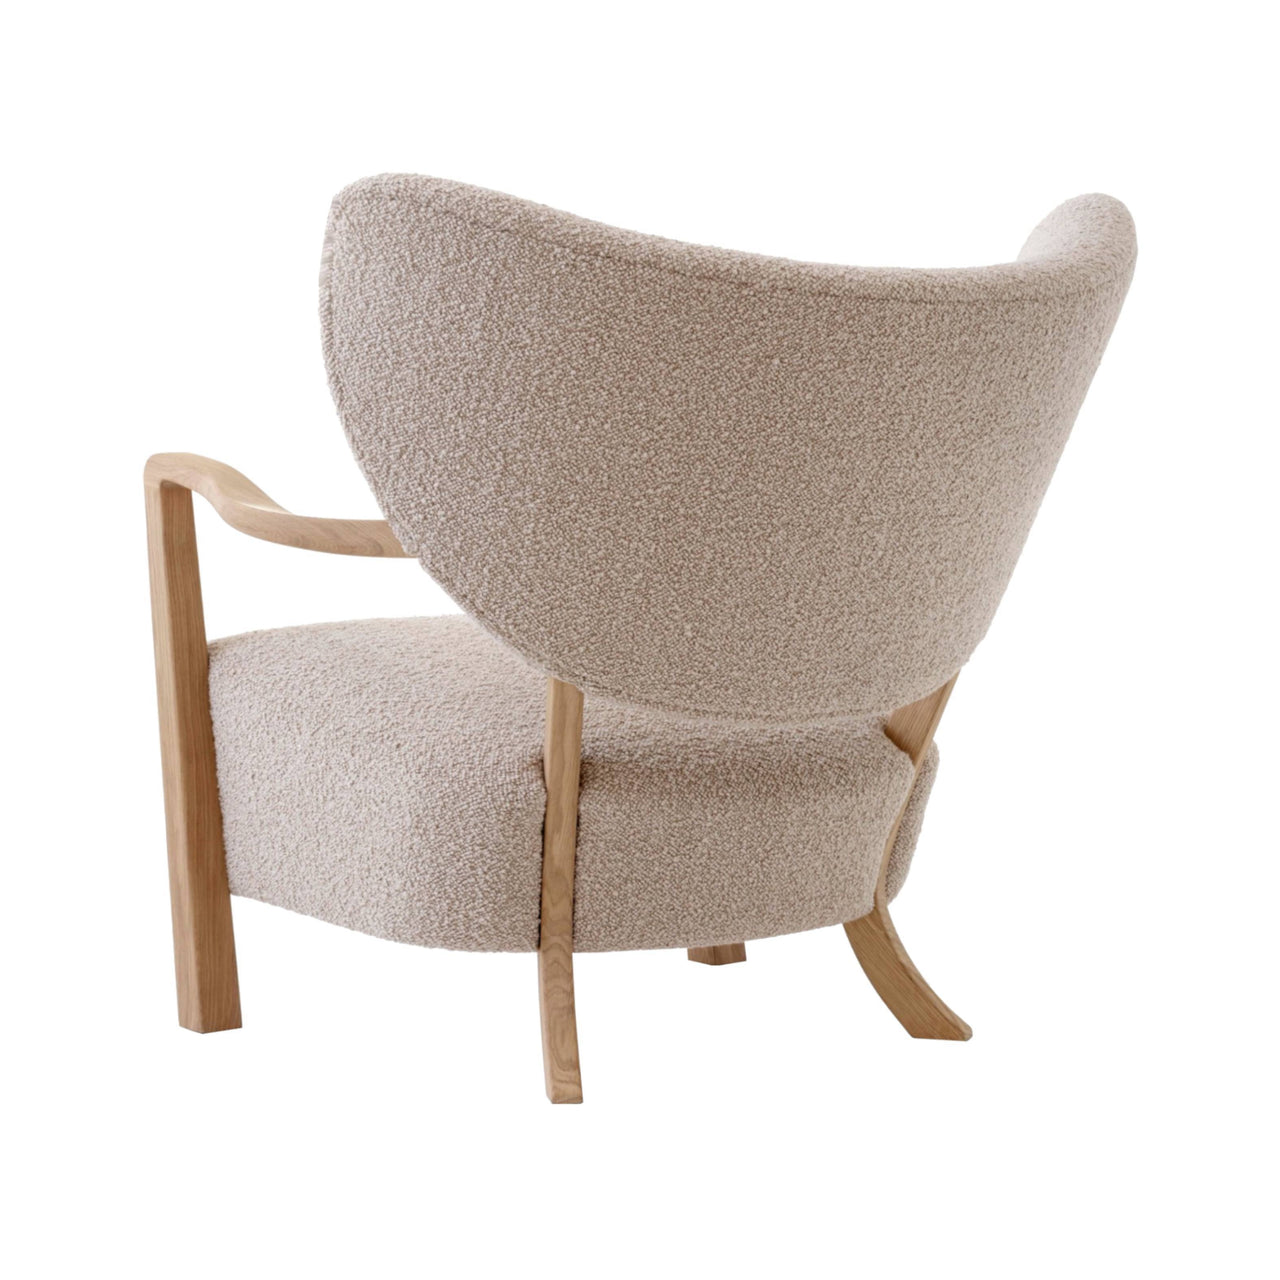 Wulff Lounge Chair ATD2: Oak + Karakorum 003